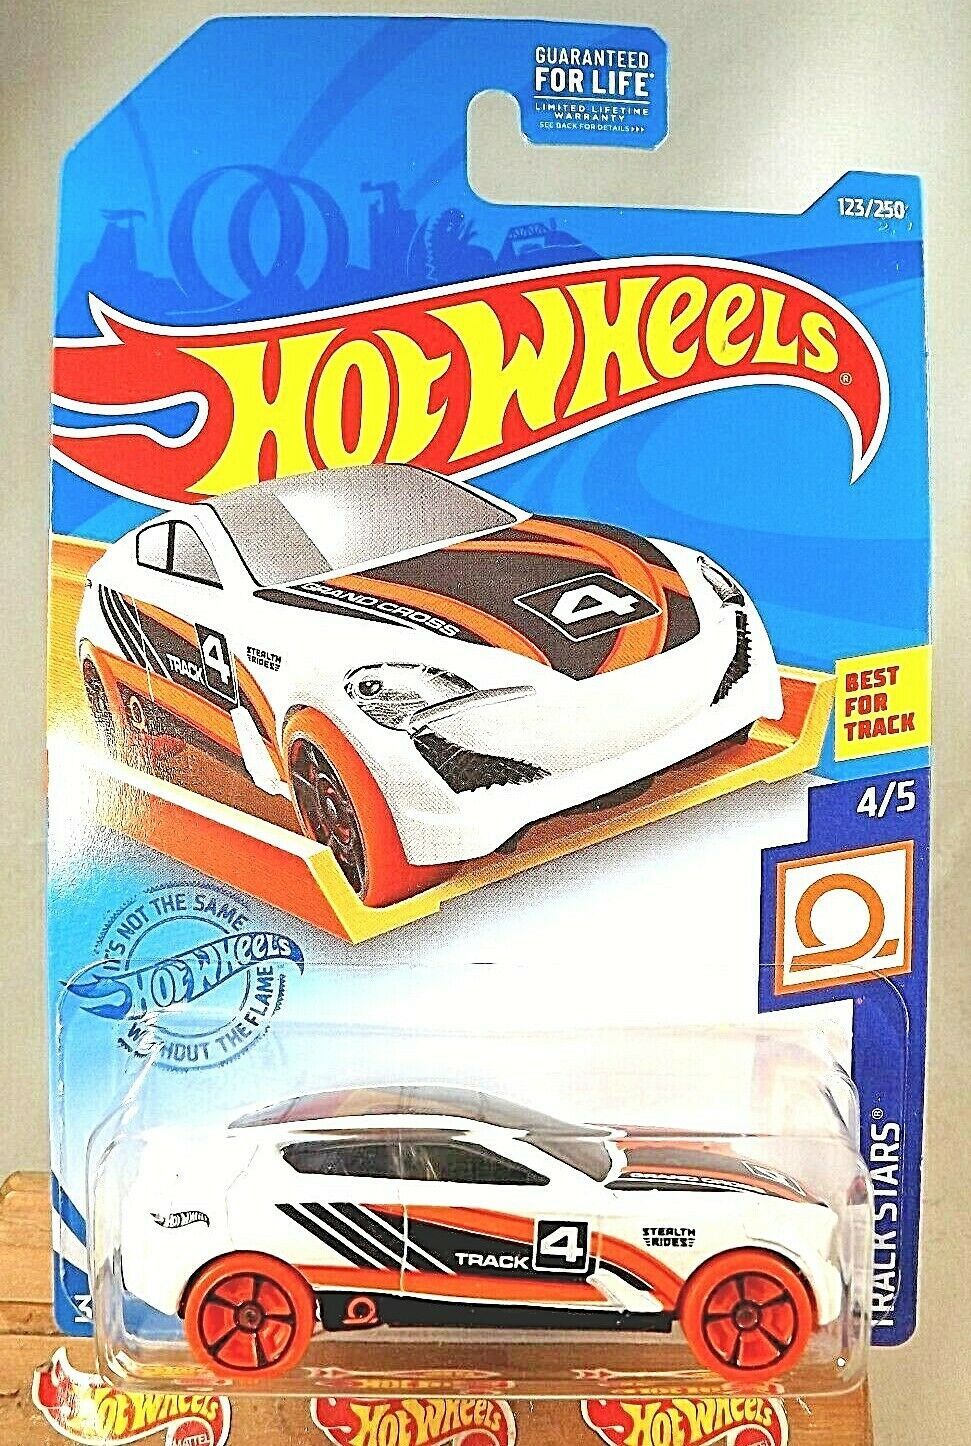 2021 Hot Wheels #123 Track Stars 4/5 GRAND CROSS White w/Orange Wheels BlkMC5Sp